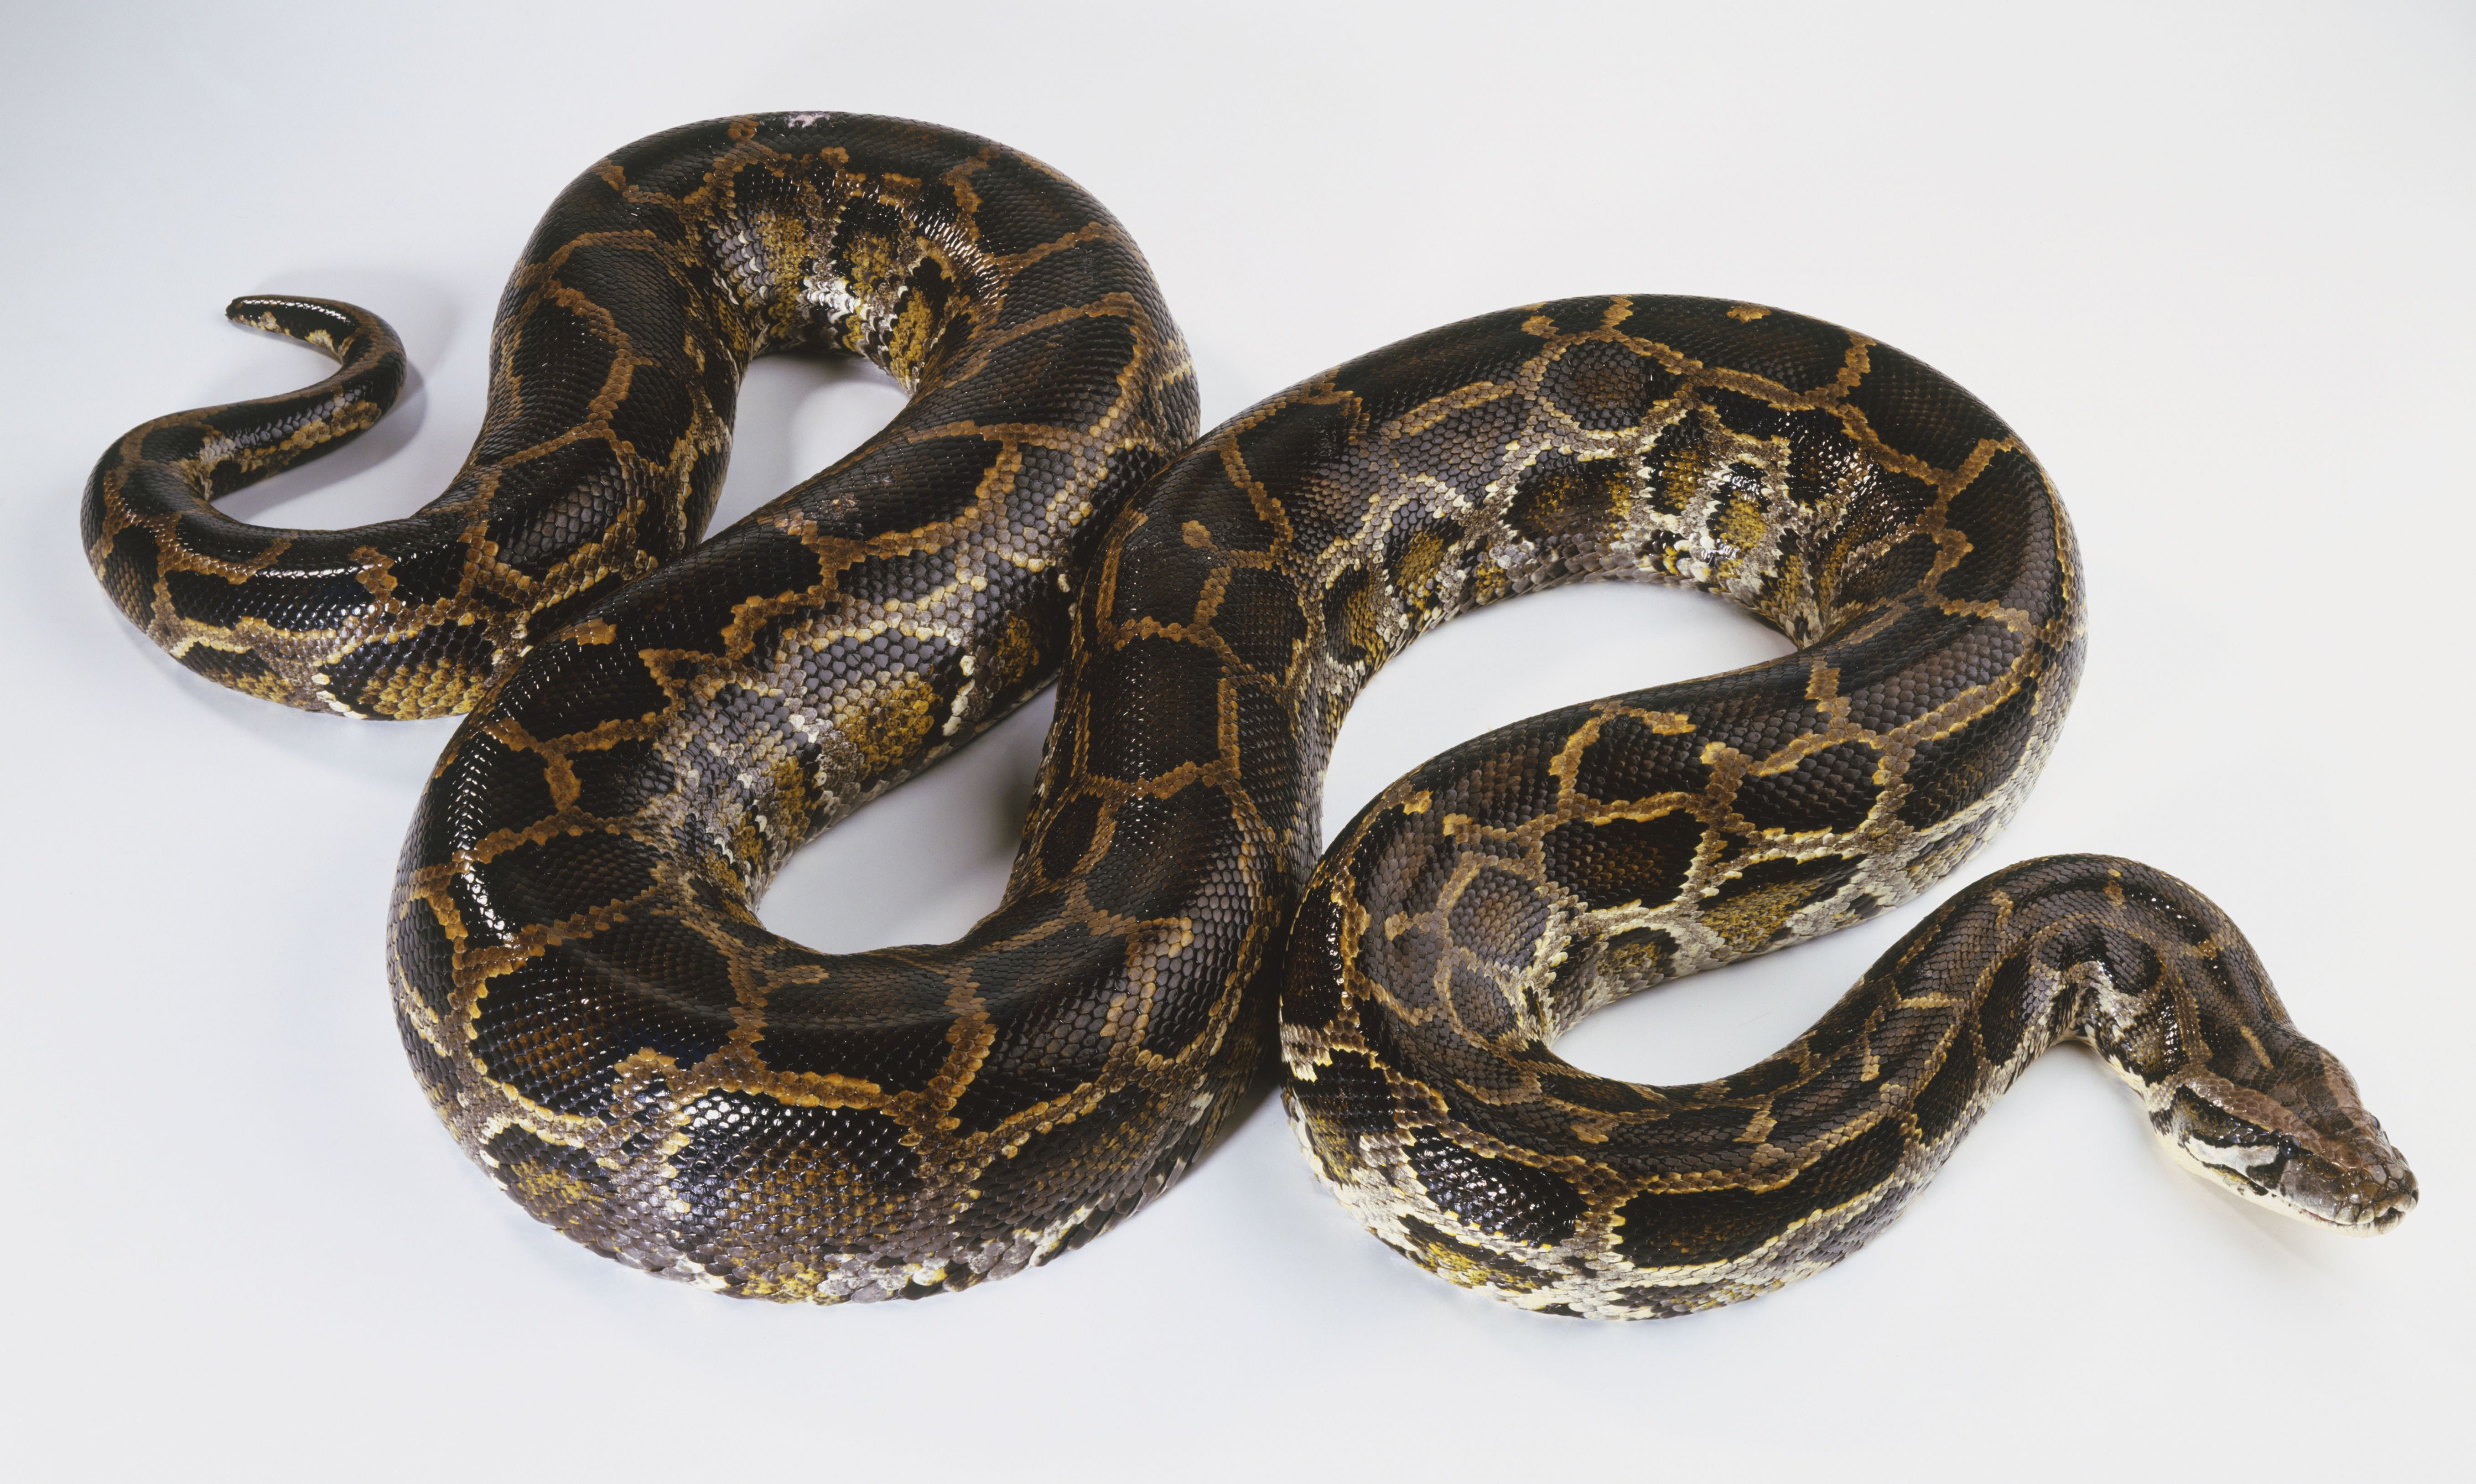 Slithering Burmese Python (Python molurus), view from above.